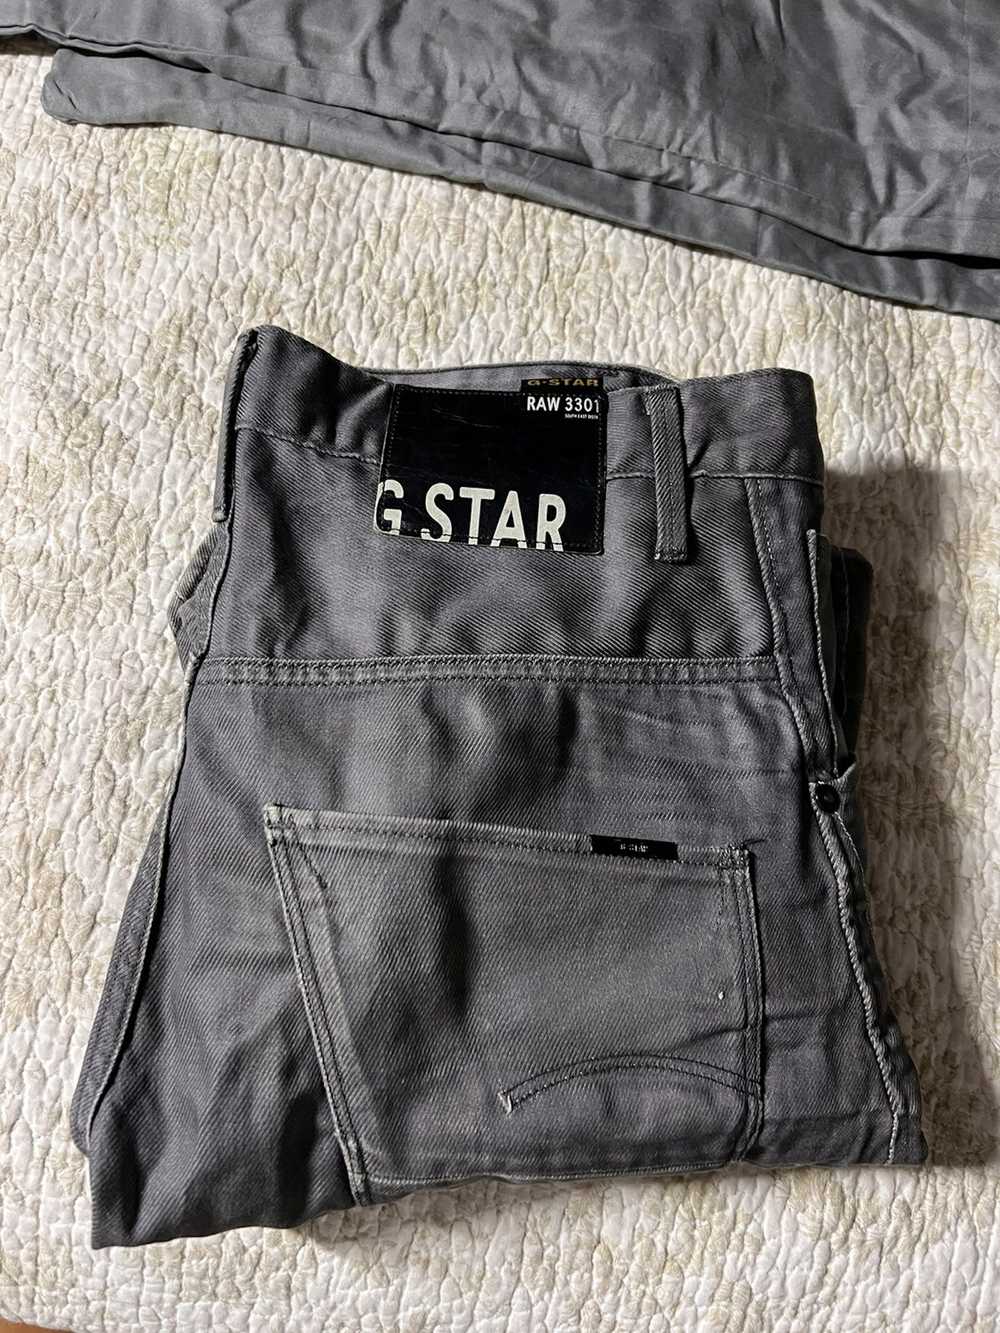 G Star Raw gstar jeans - image 3